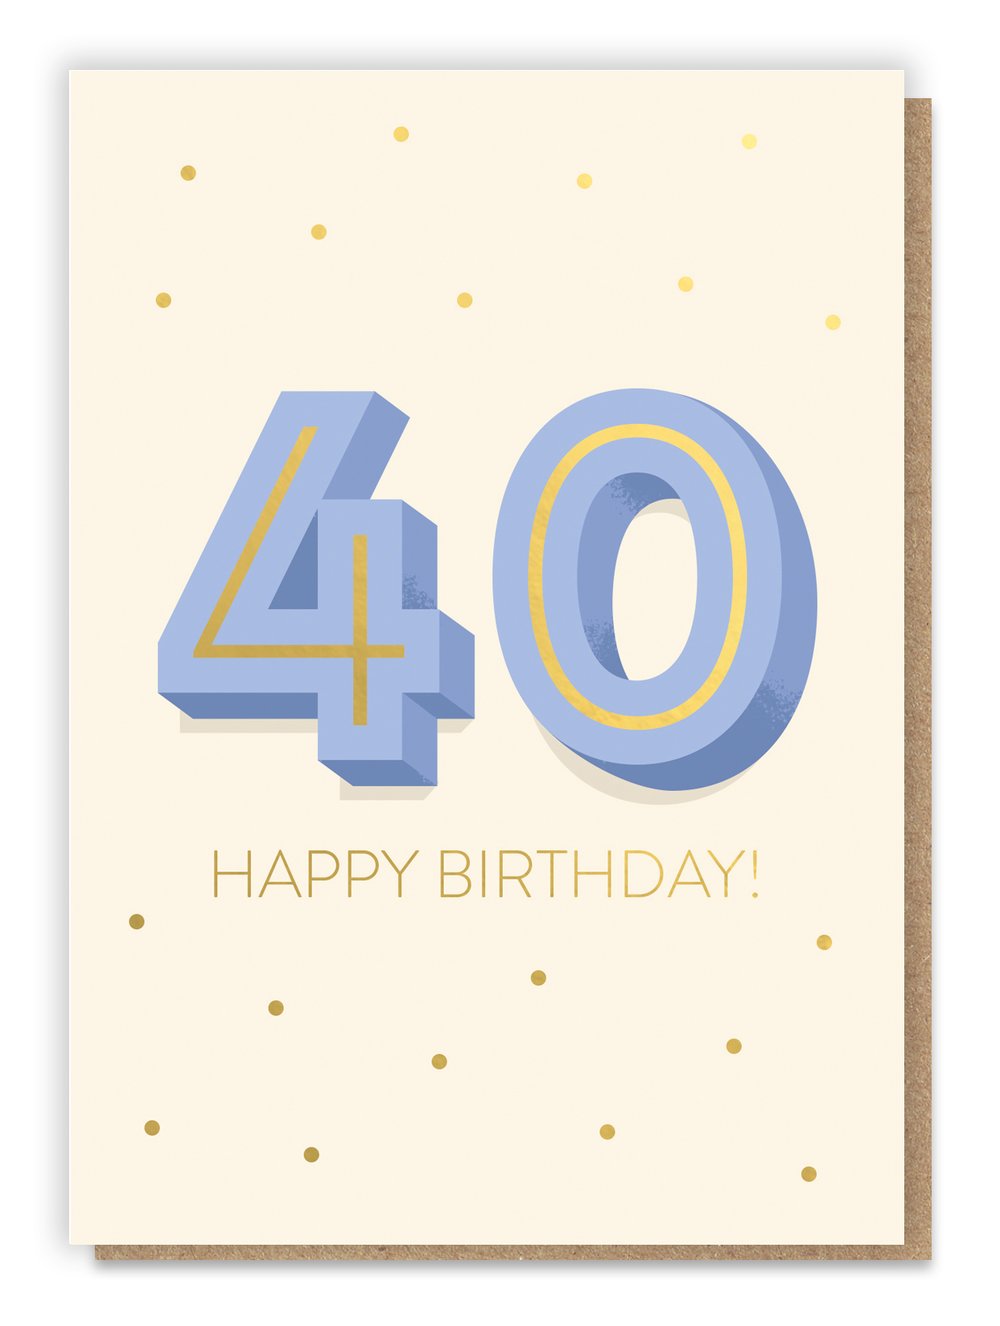 Big 4-0 Birthday Card - Age 40